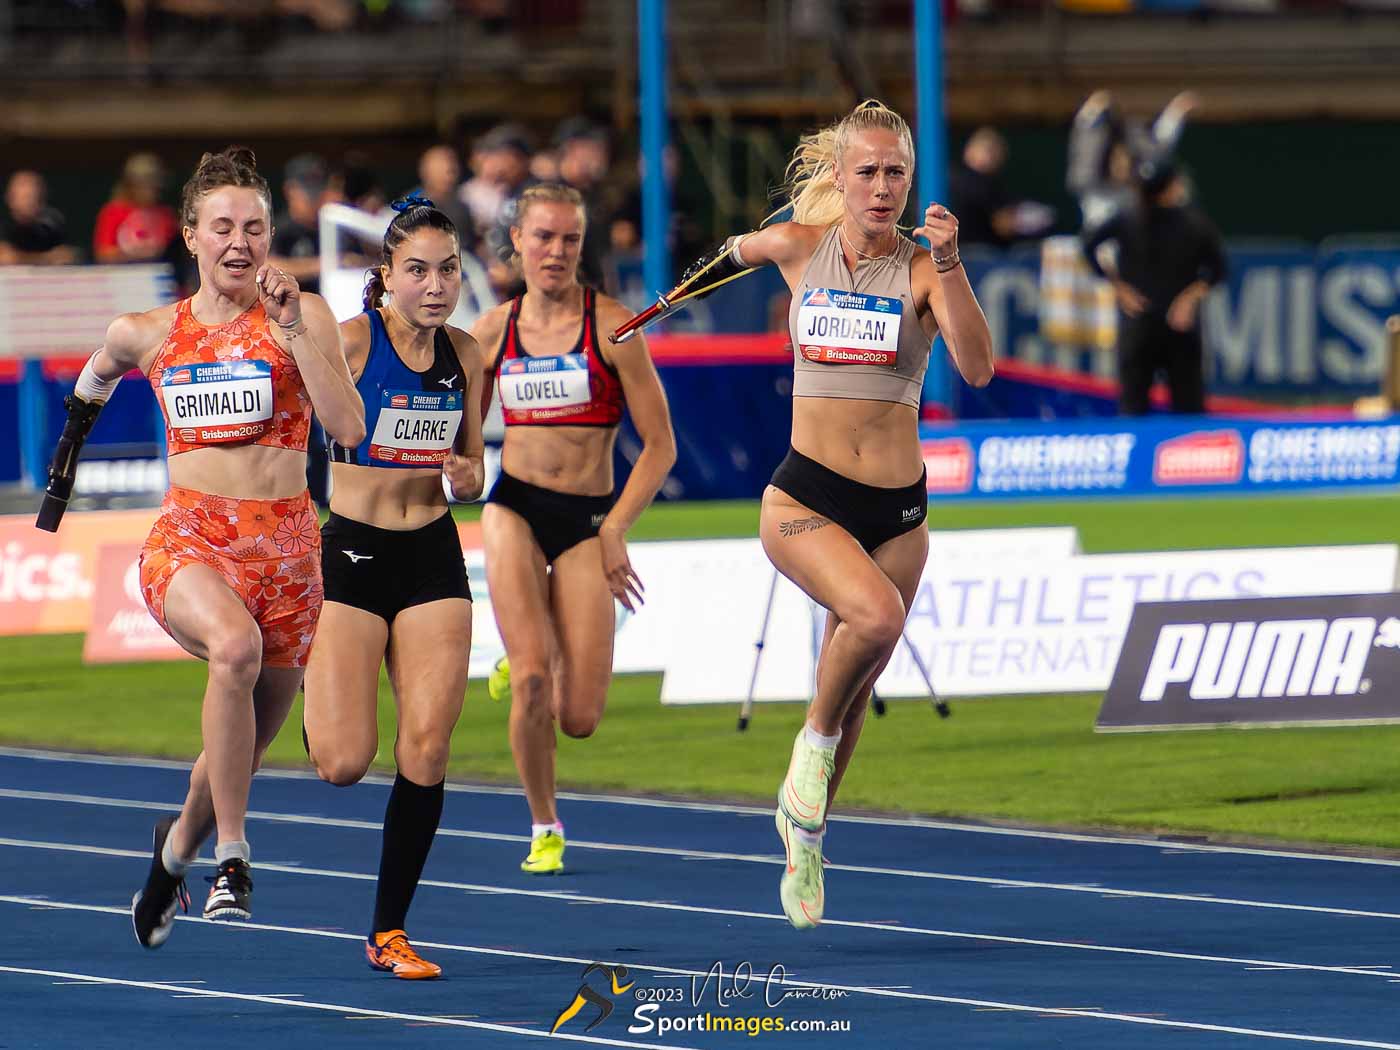 Anna Grimaldi, Rhiannon Clarke, Mali Lovell, Alissa Jordaan, Women's Para Athleticss 100m